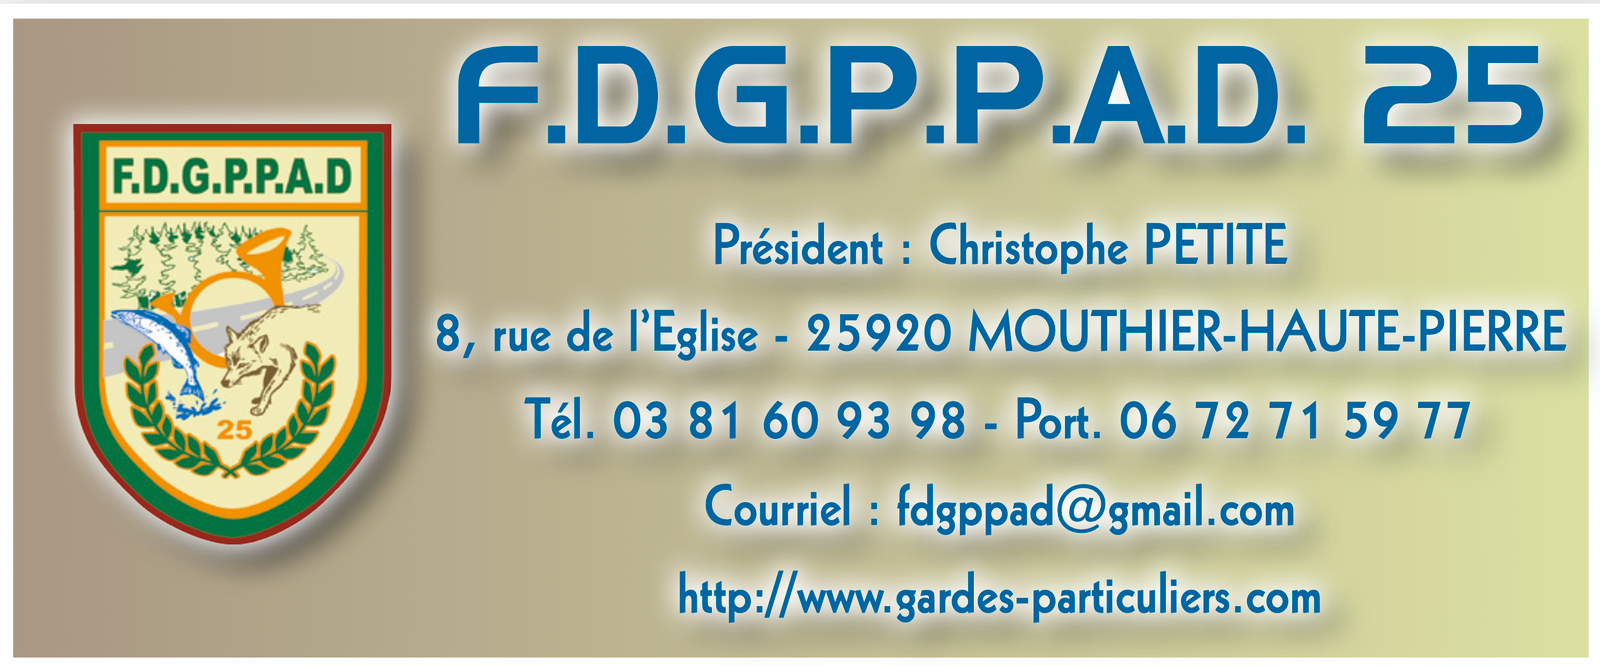 FDGPPAD 25